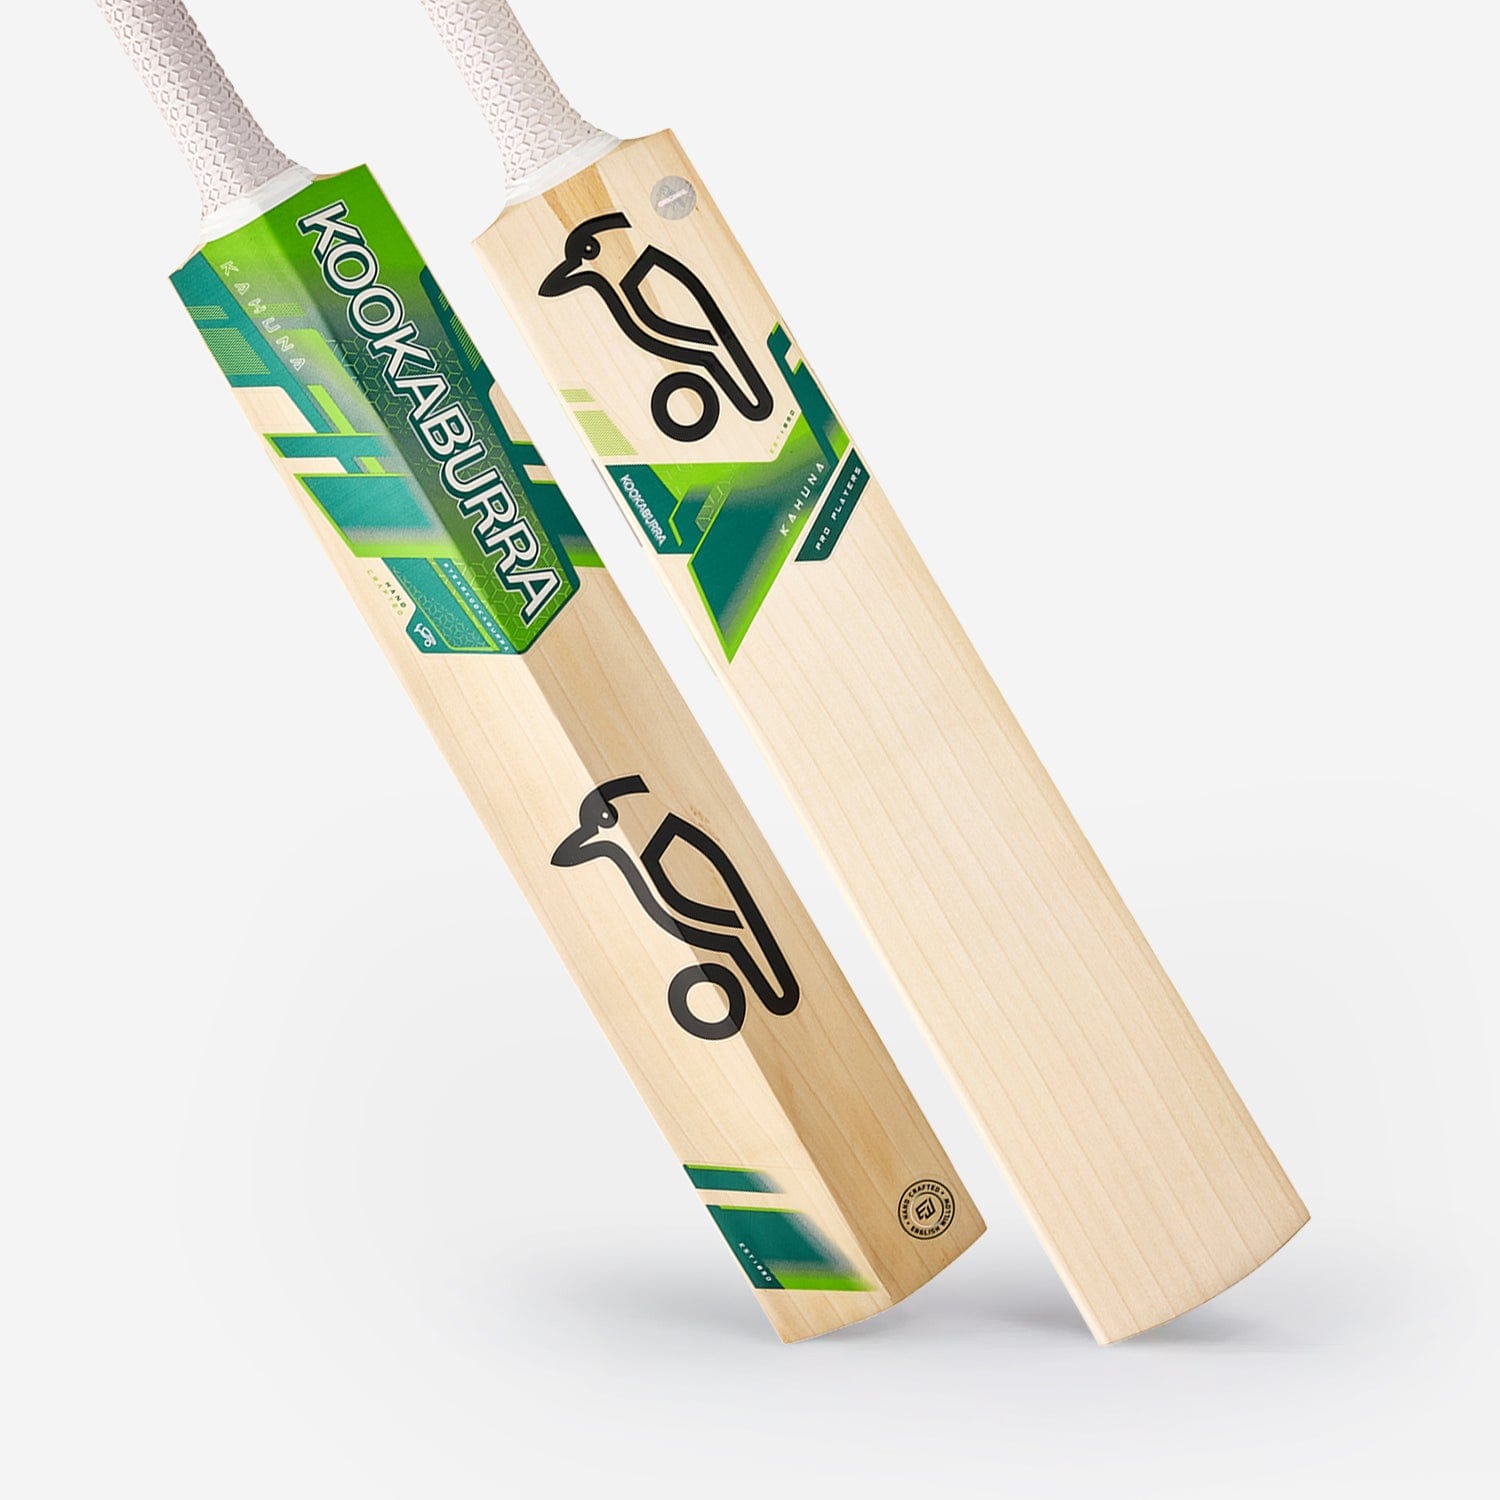 Cricket Batting Gloves Kahuna 900 By Kookaburra - Free Ground